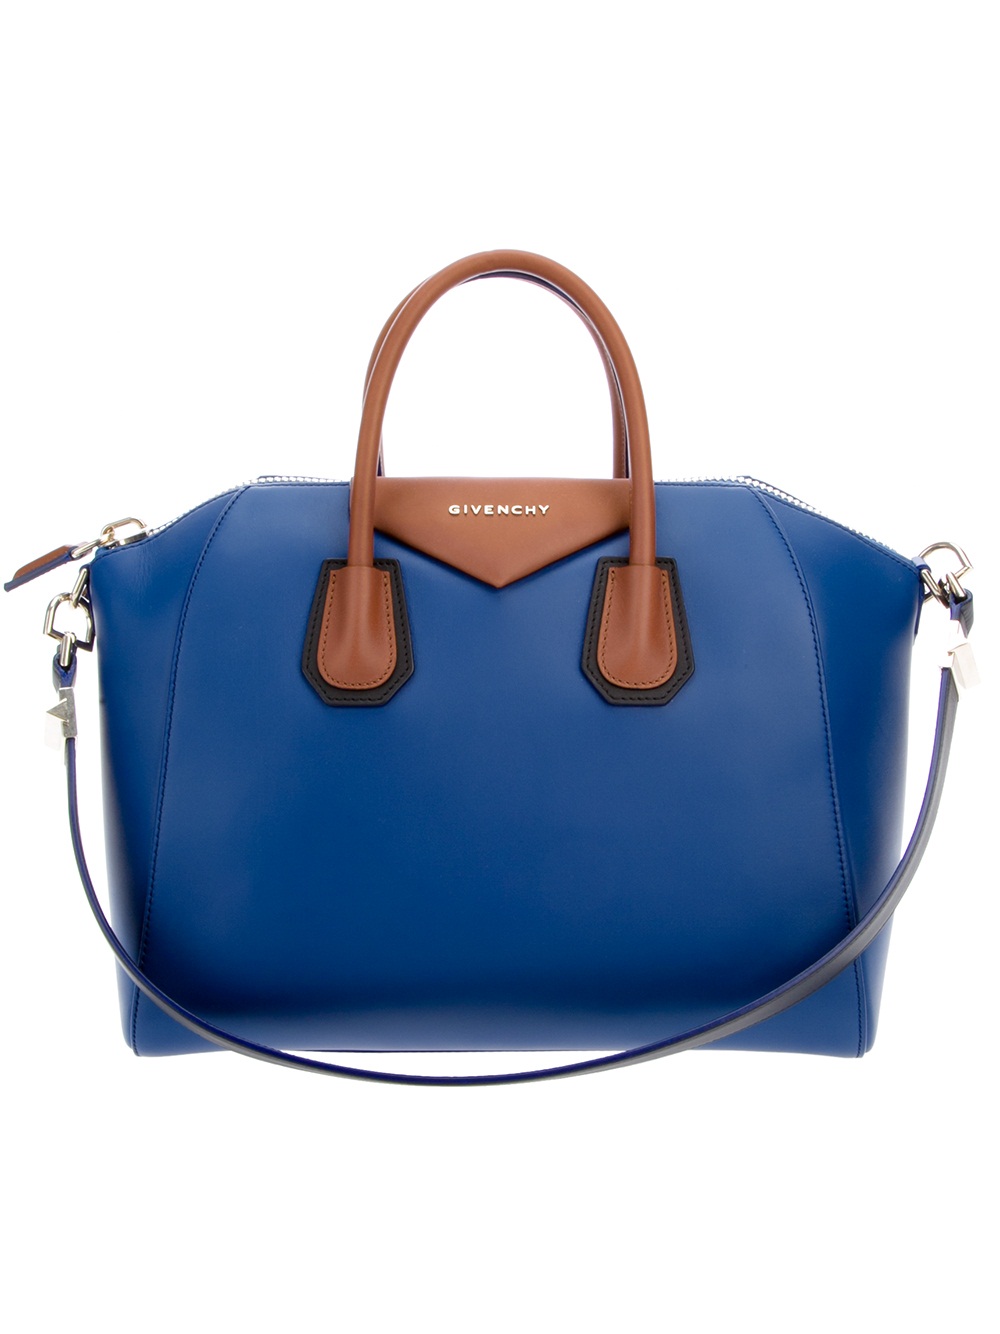 Givenchy Antigona Bag Medium in Blue | Lyst